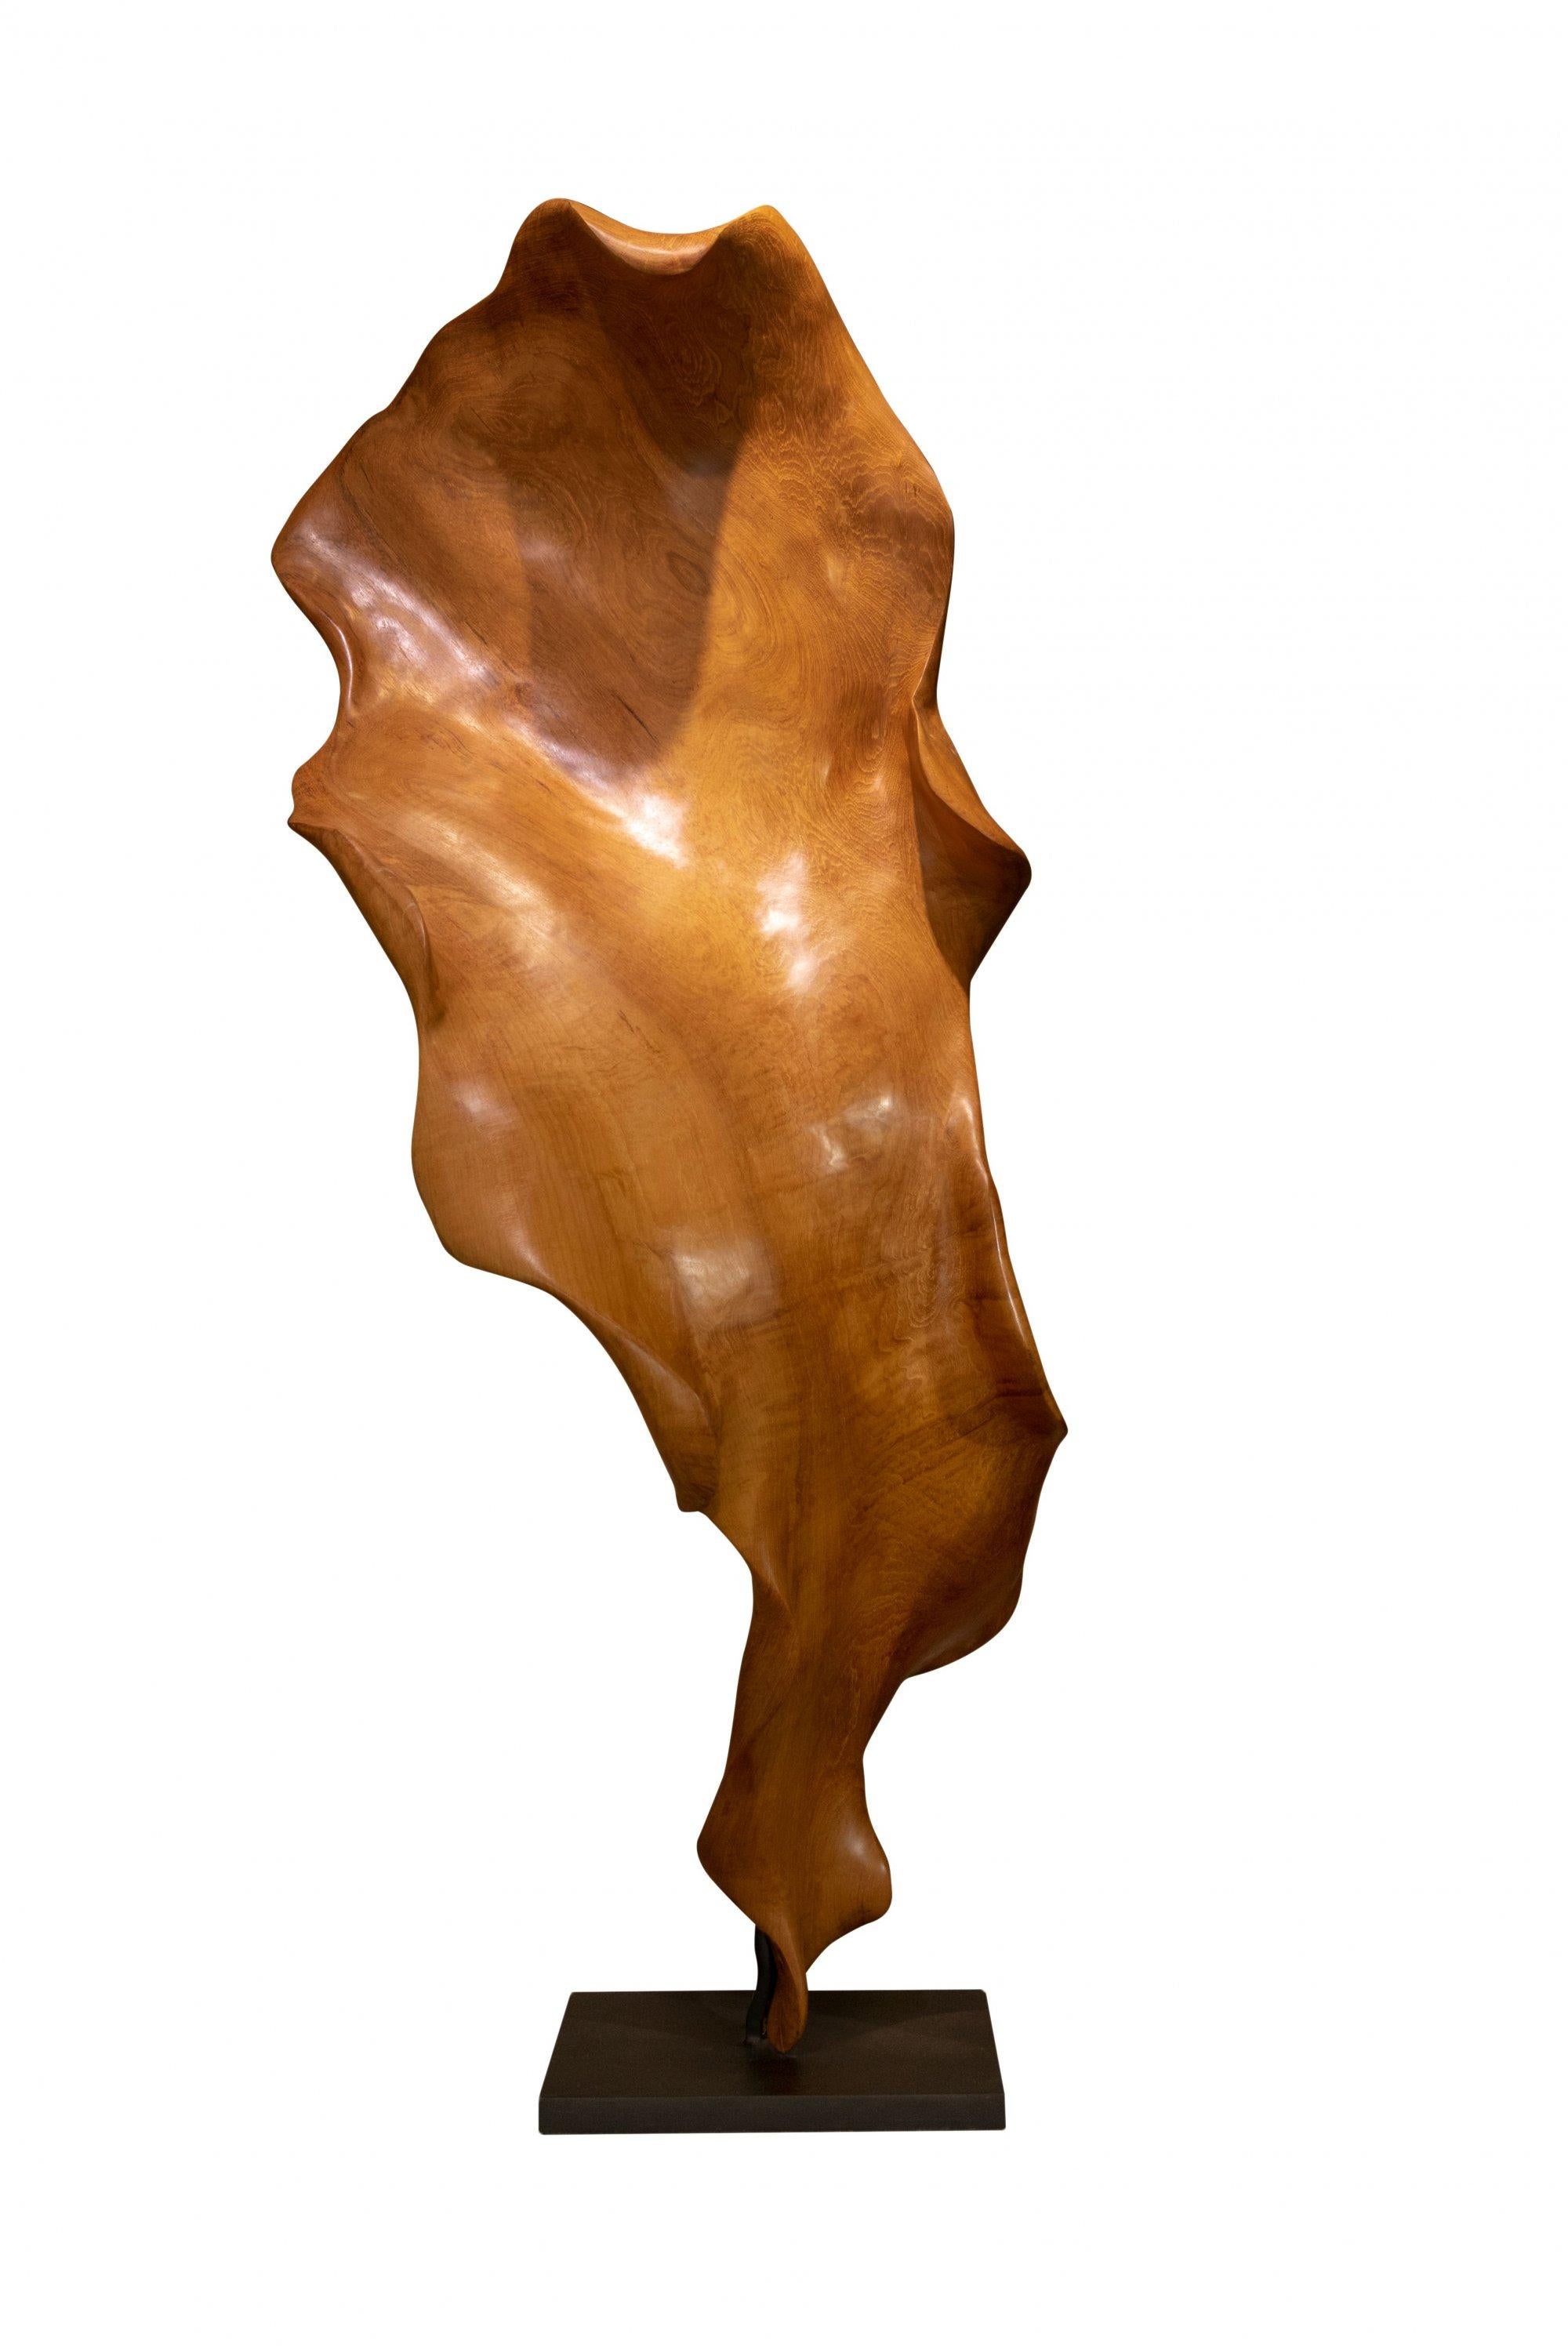 Joaquim Ingravidesa Abstract Sculpture – Poise - 21. Jahrhundert, Zeitgenössisch, Abstrakte Skulptur, Mahagoniwurzel, Holz